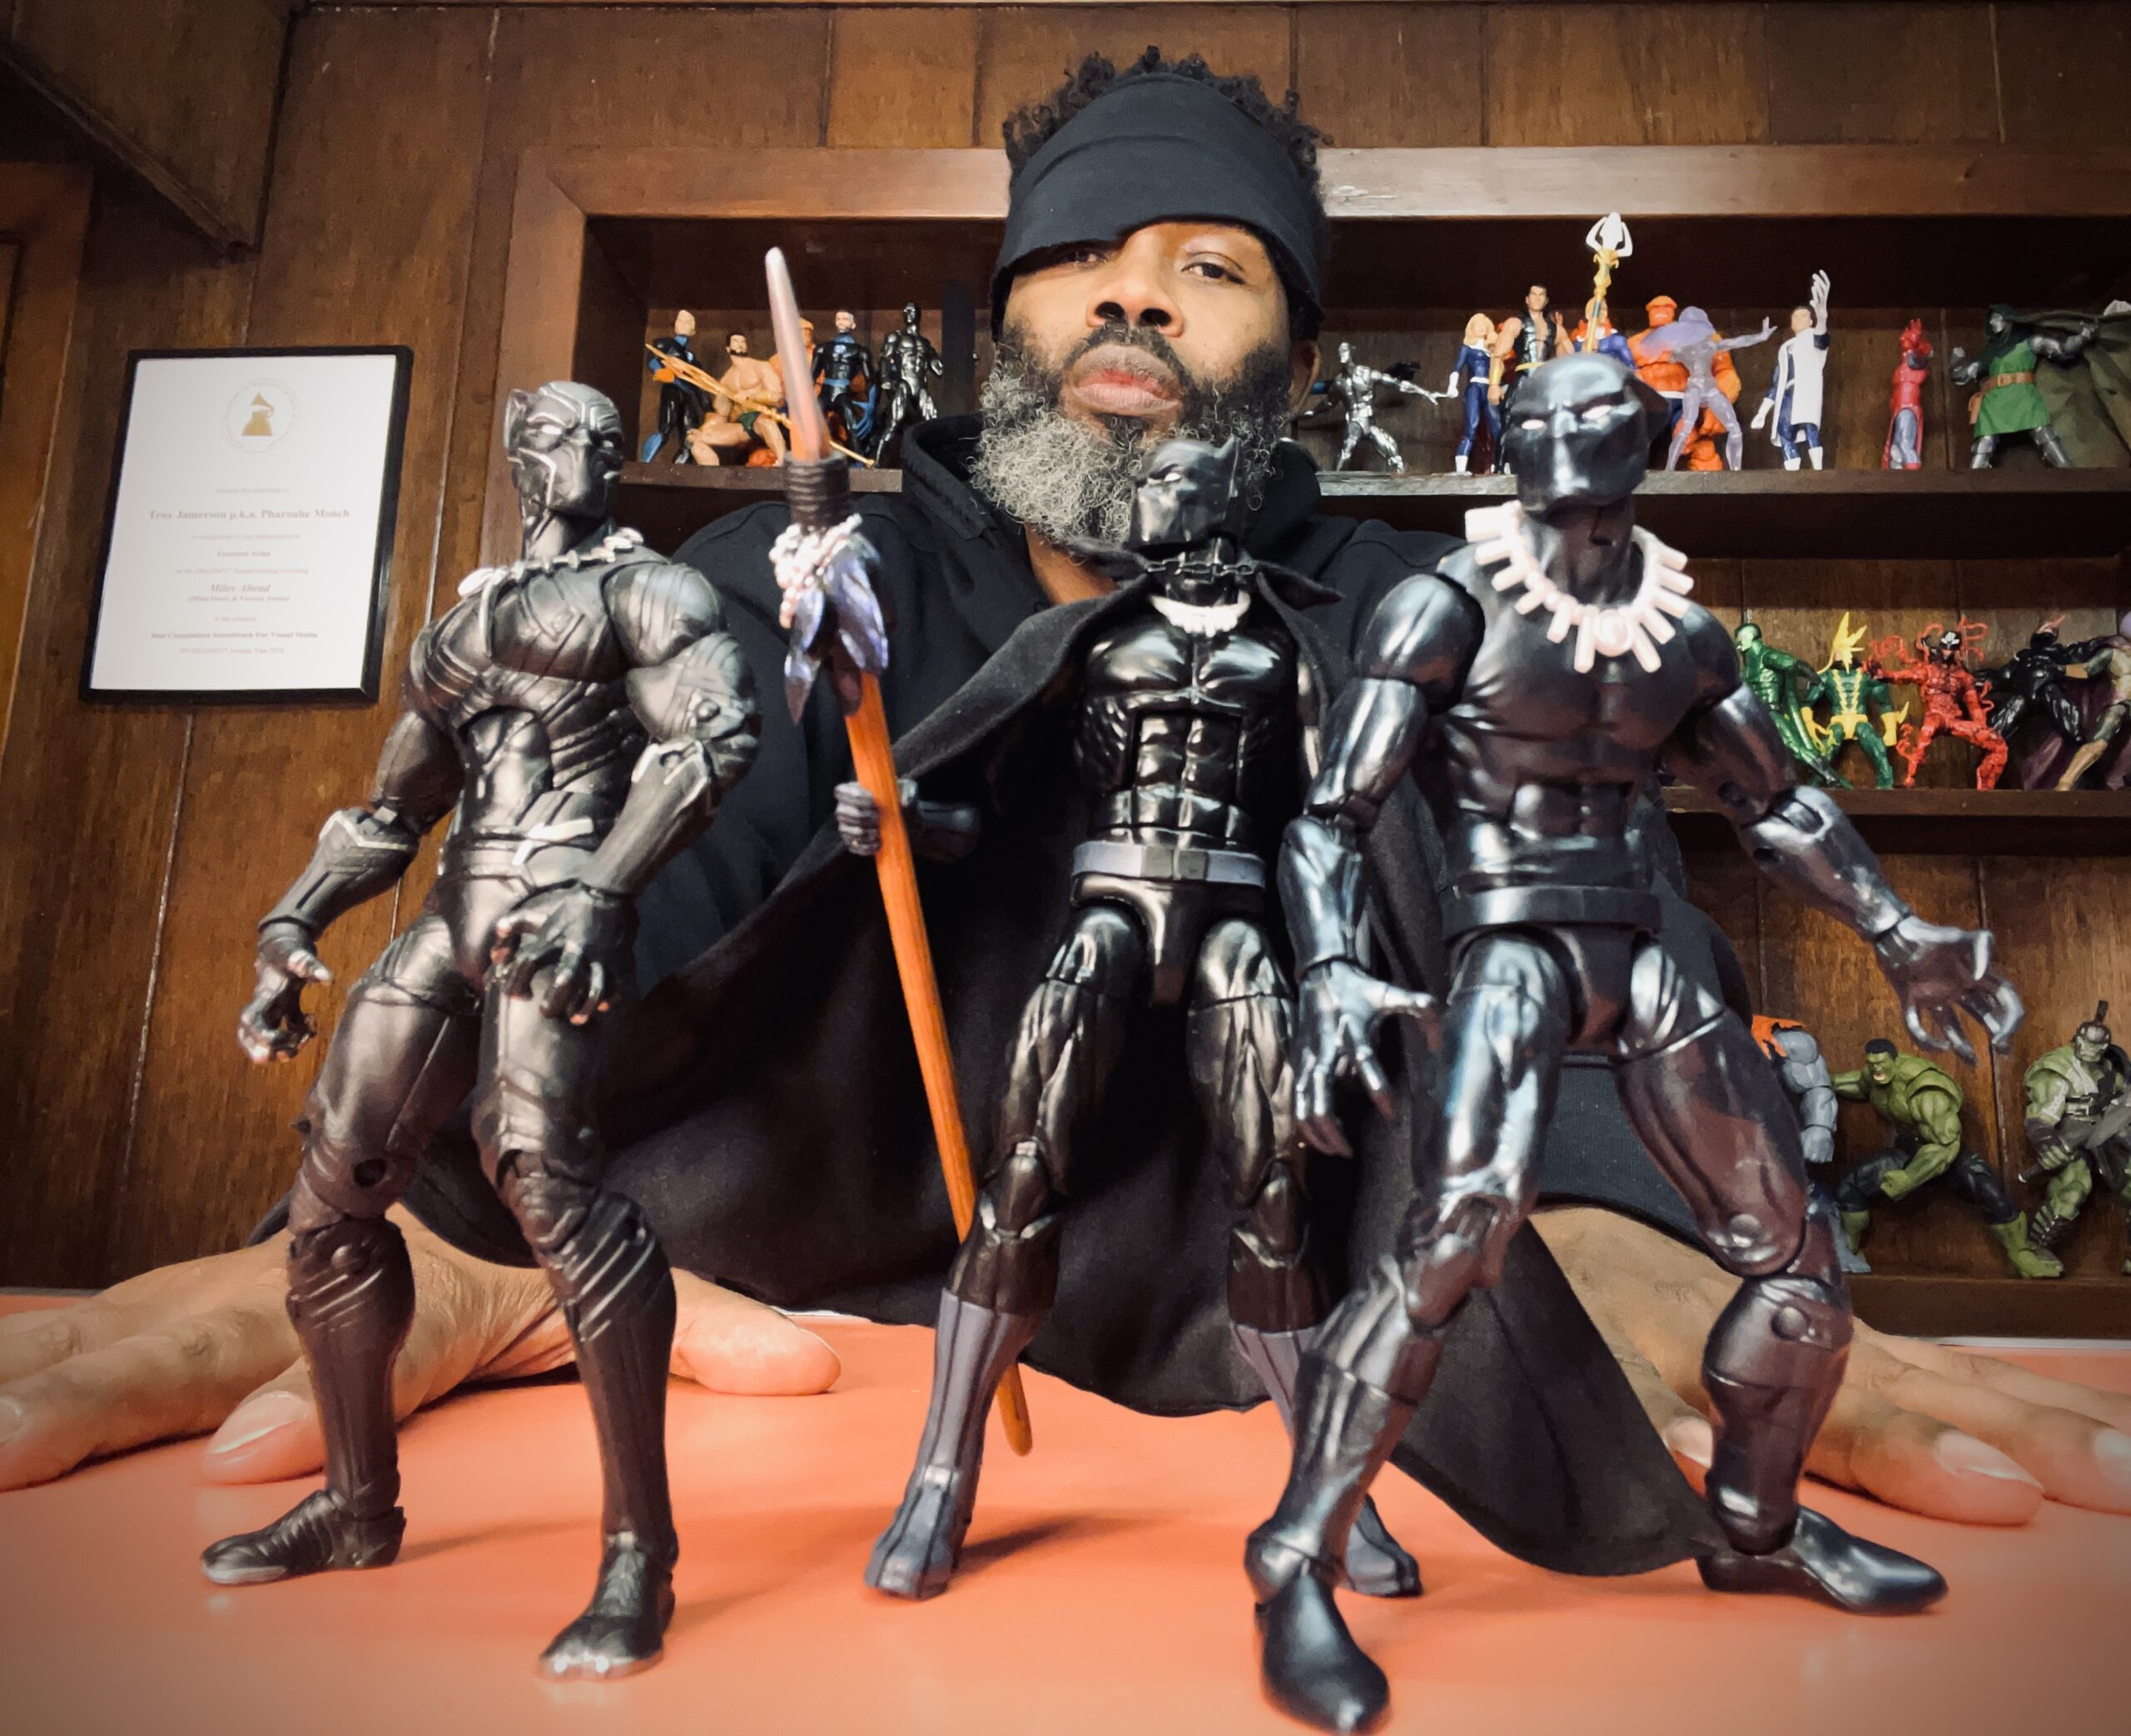 Pharoahe Monch with I Am Legend Black Panther figurines. (Credit: Pharoahe Monch)